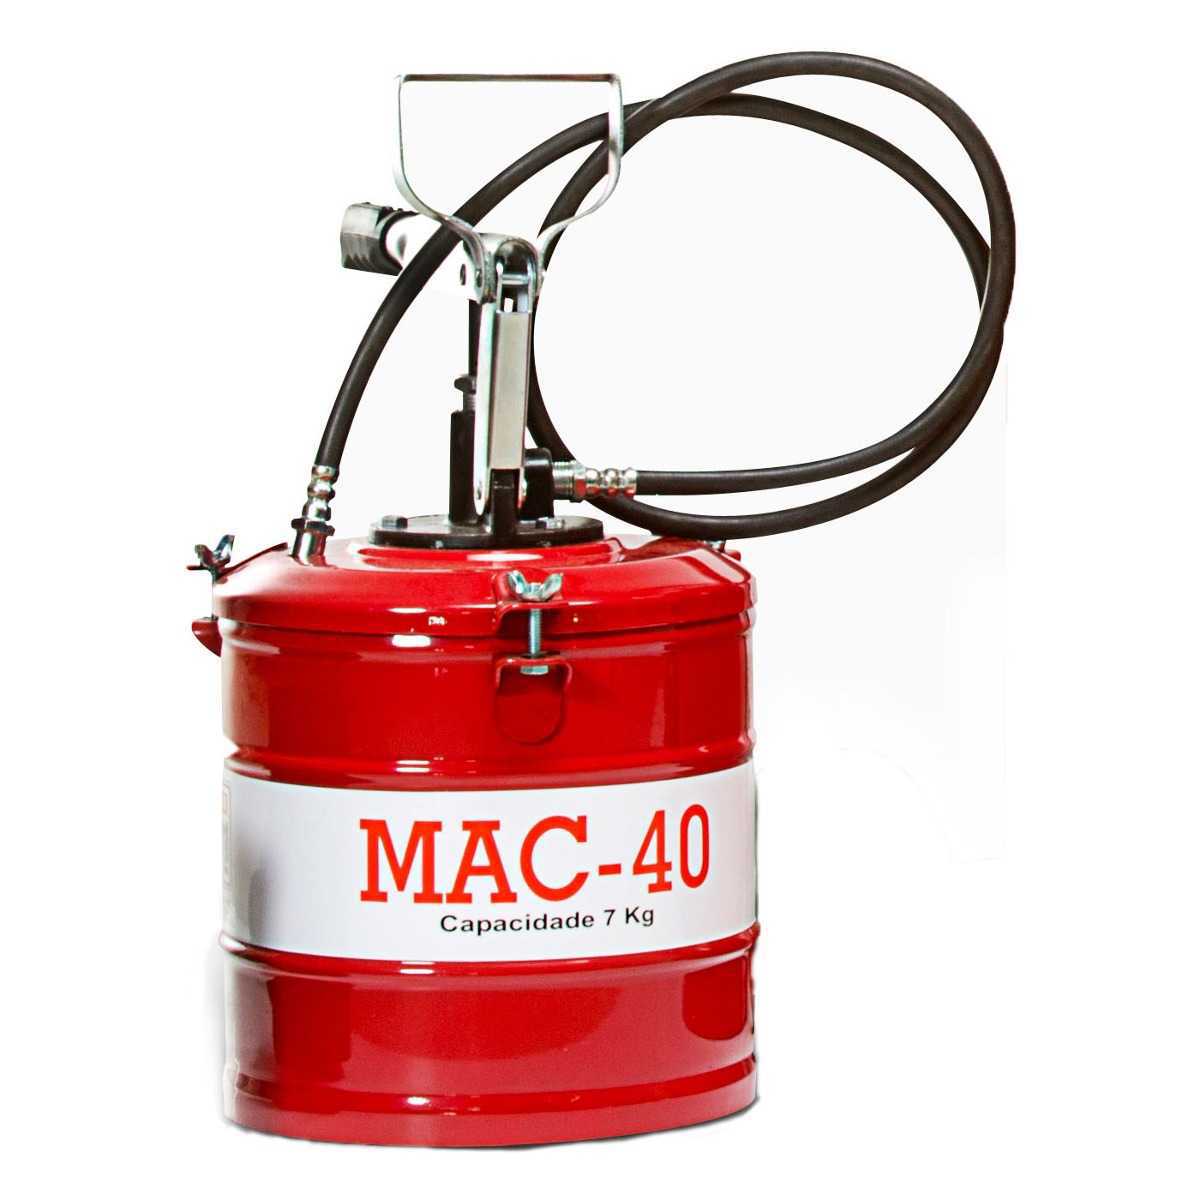 Engraxadeira Maclub 7Kg Mac-40 (Ml0040.1013)